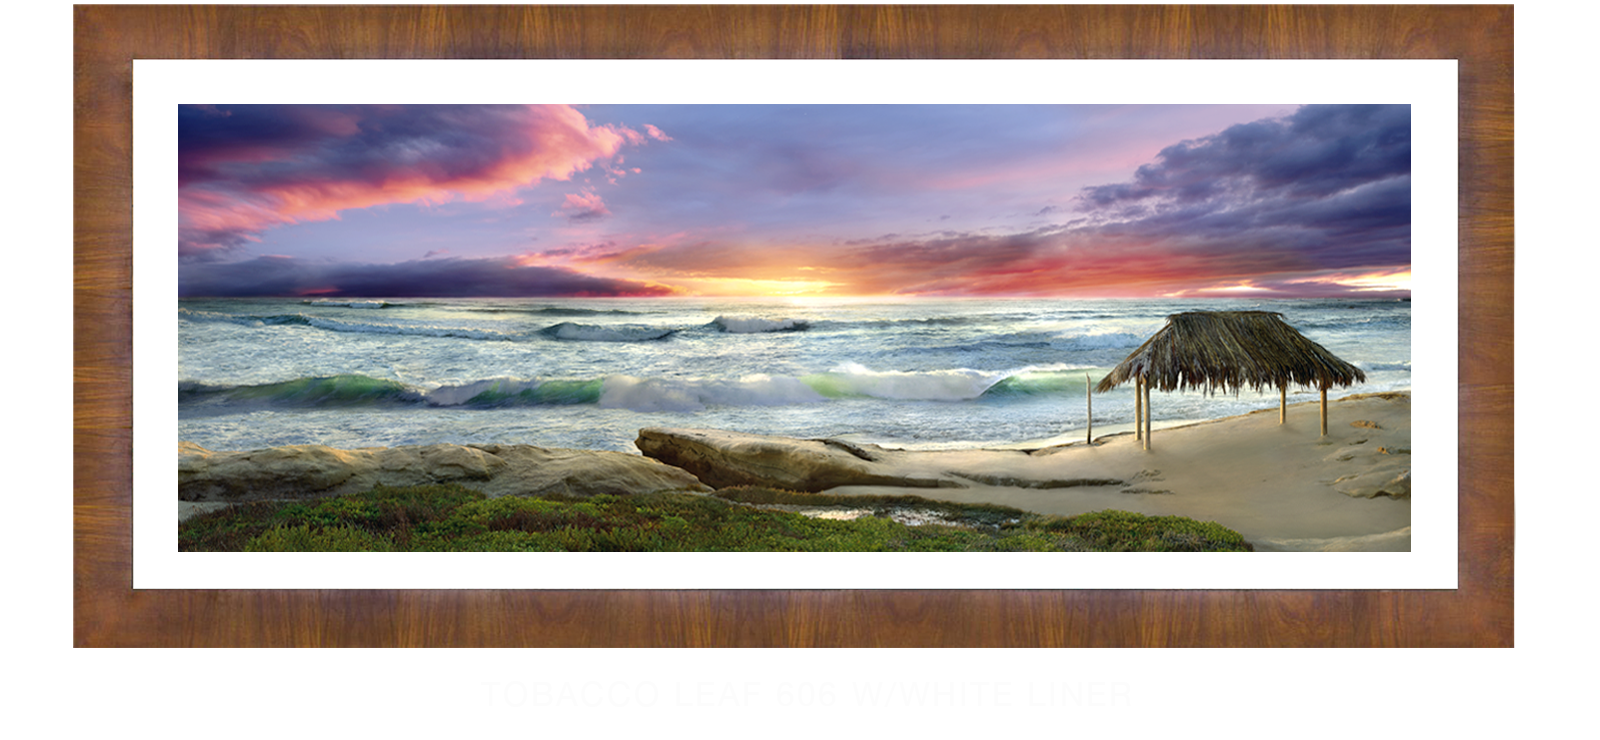 24 Tobacco Leaf 606 w_Wht Liner T